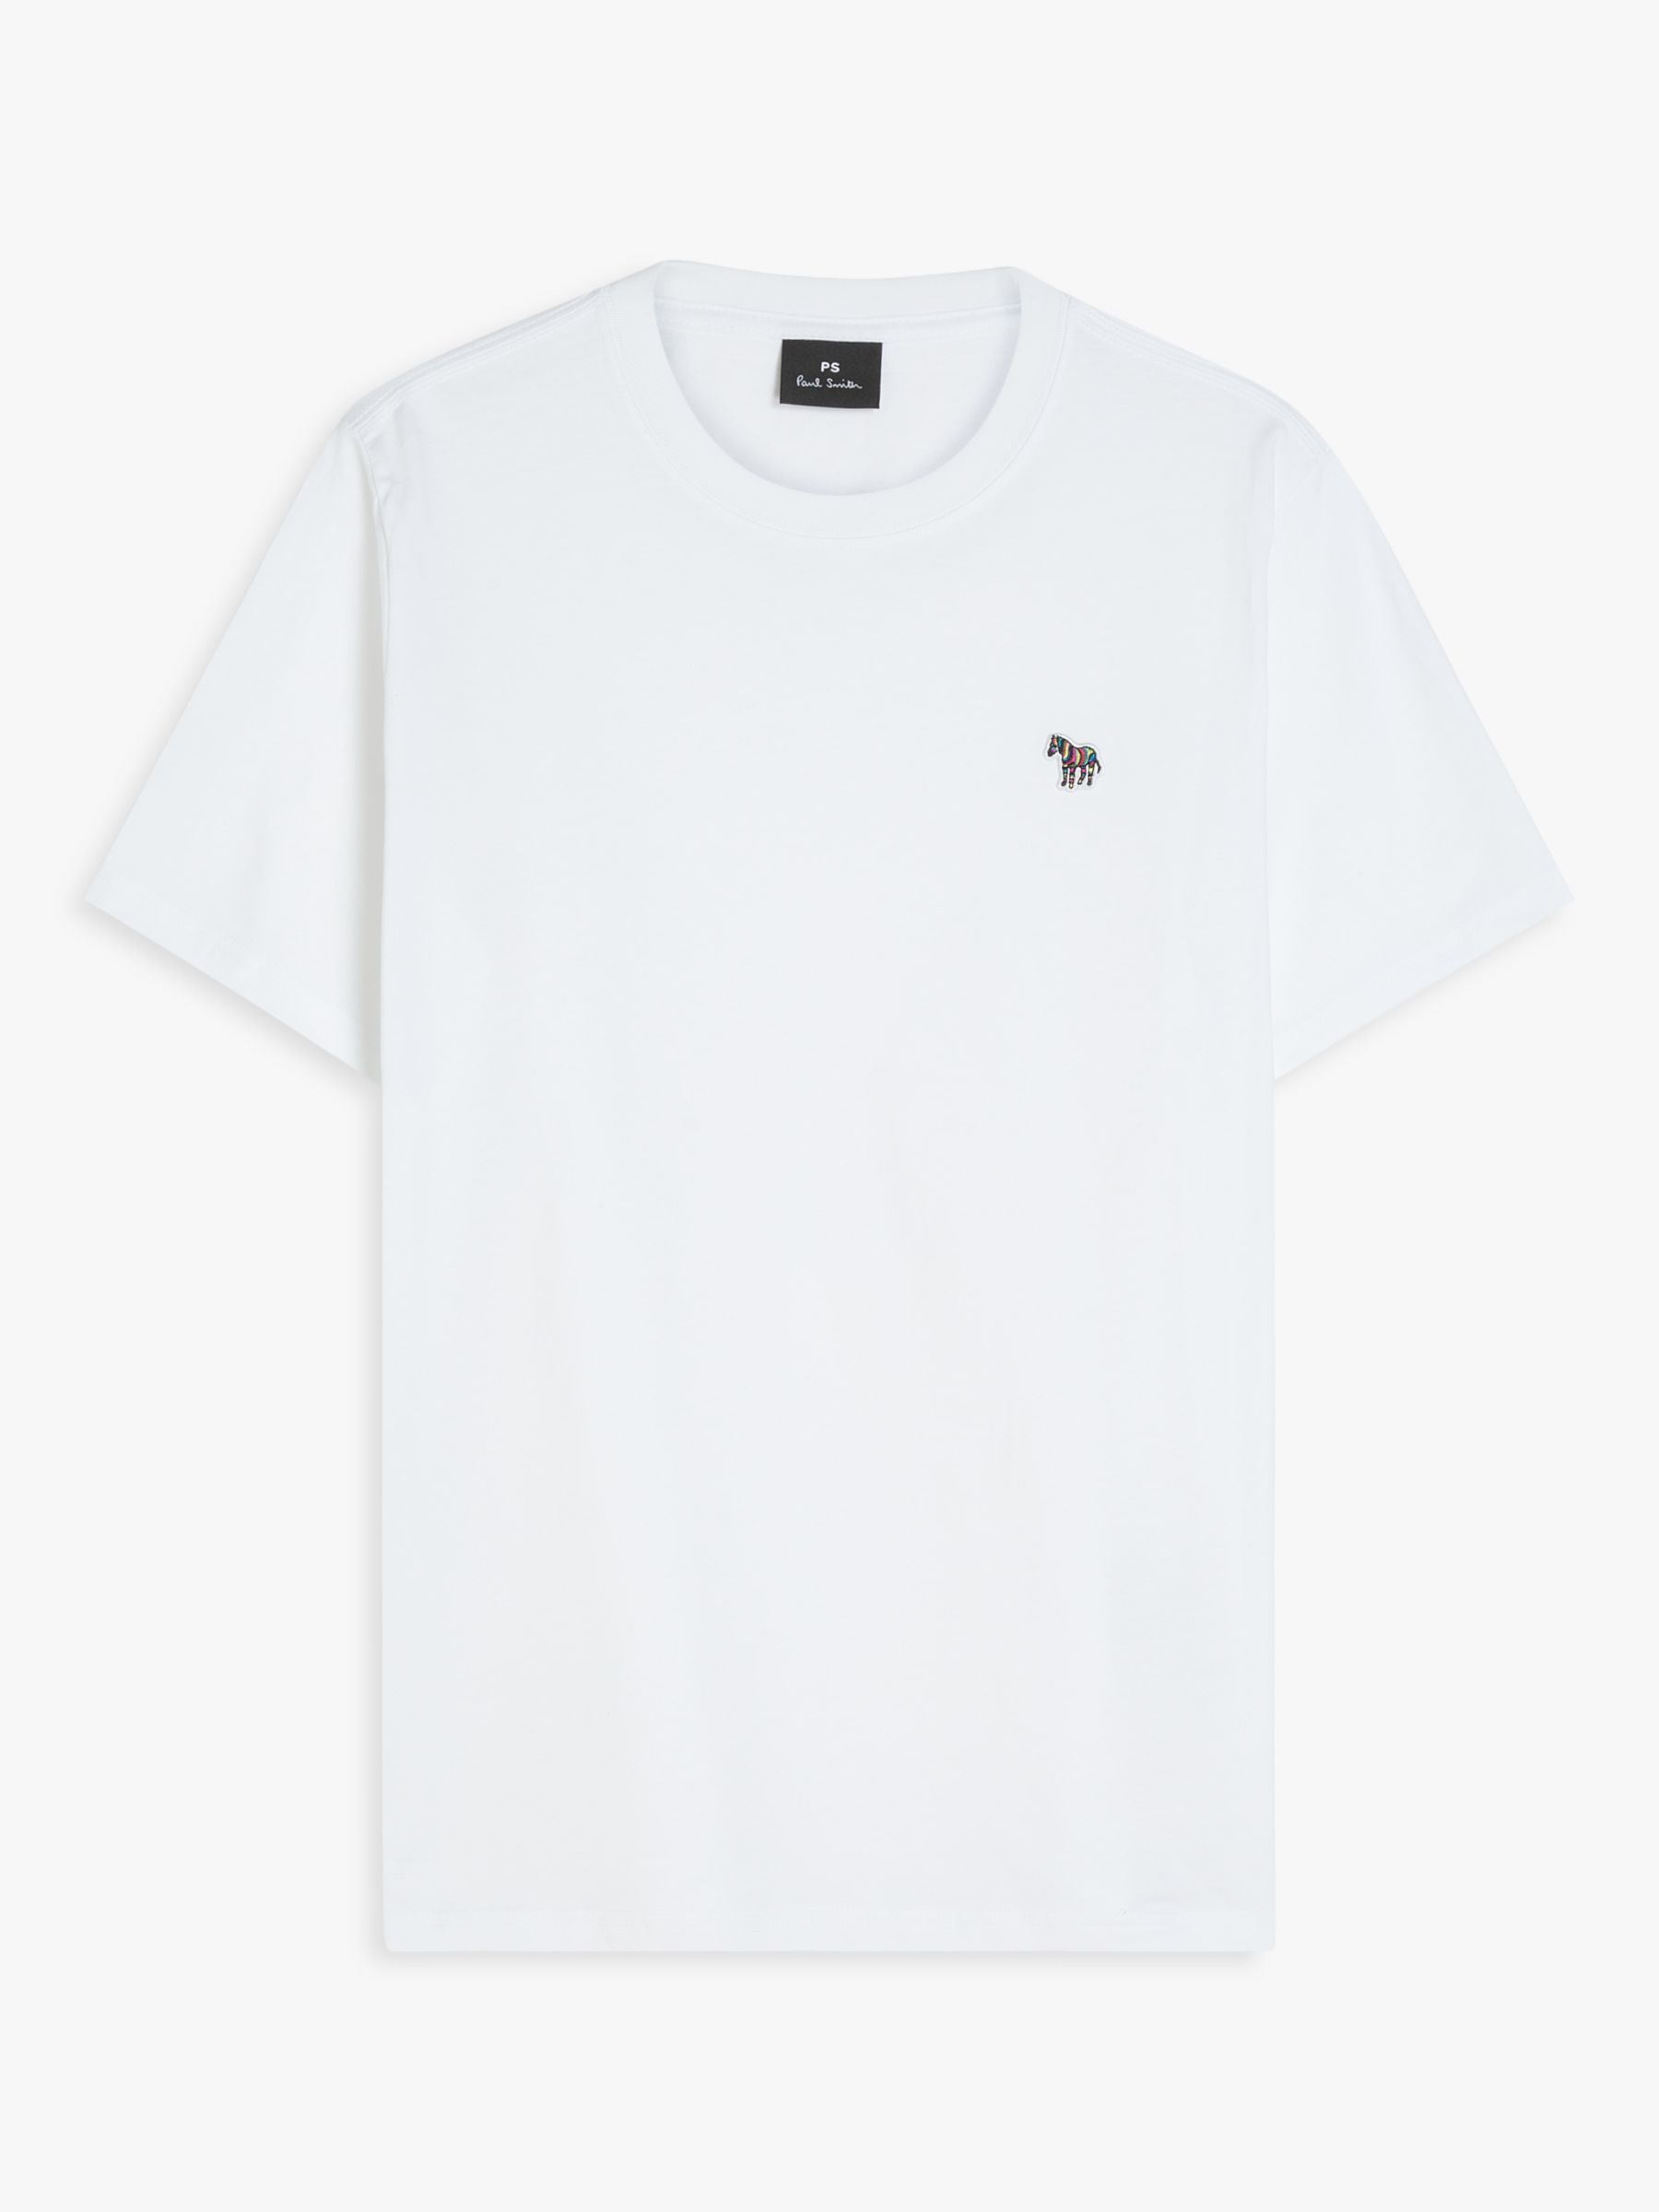 PS Paul Smith Zebra Crew T-Shirt, White at John Lewis & Partners